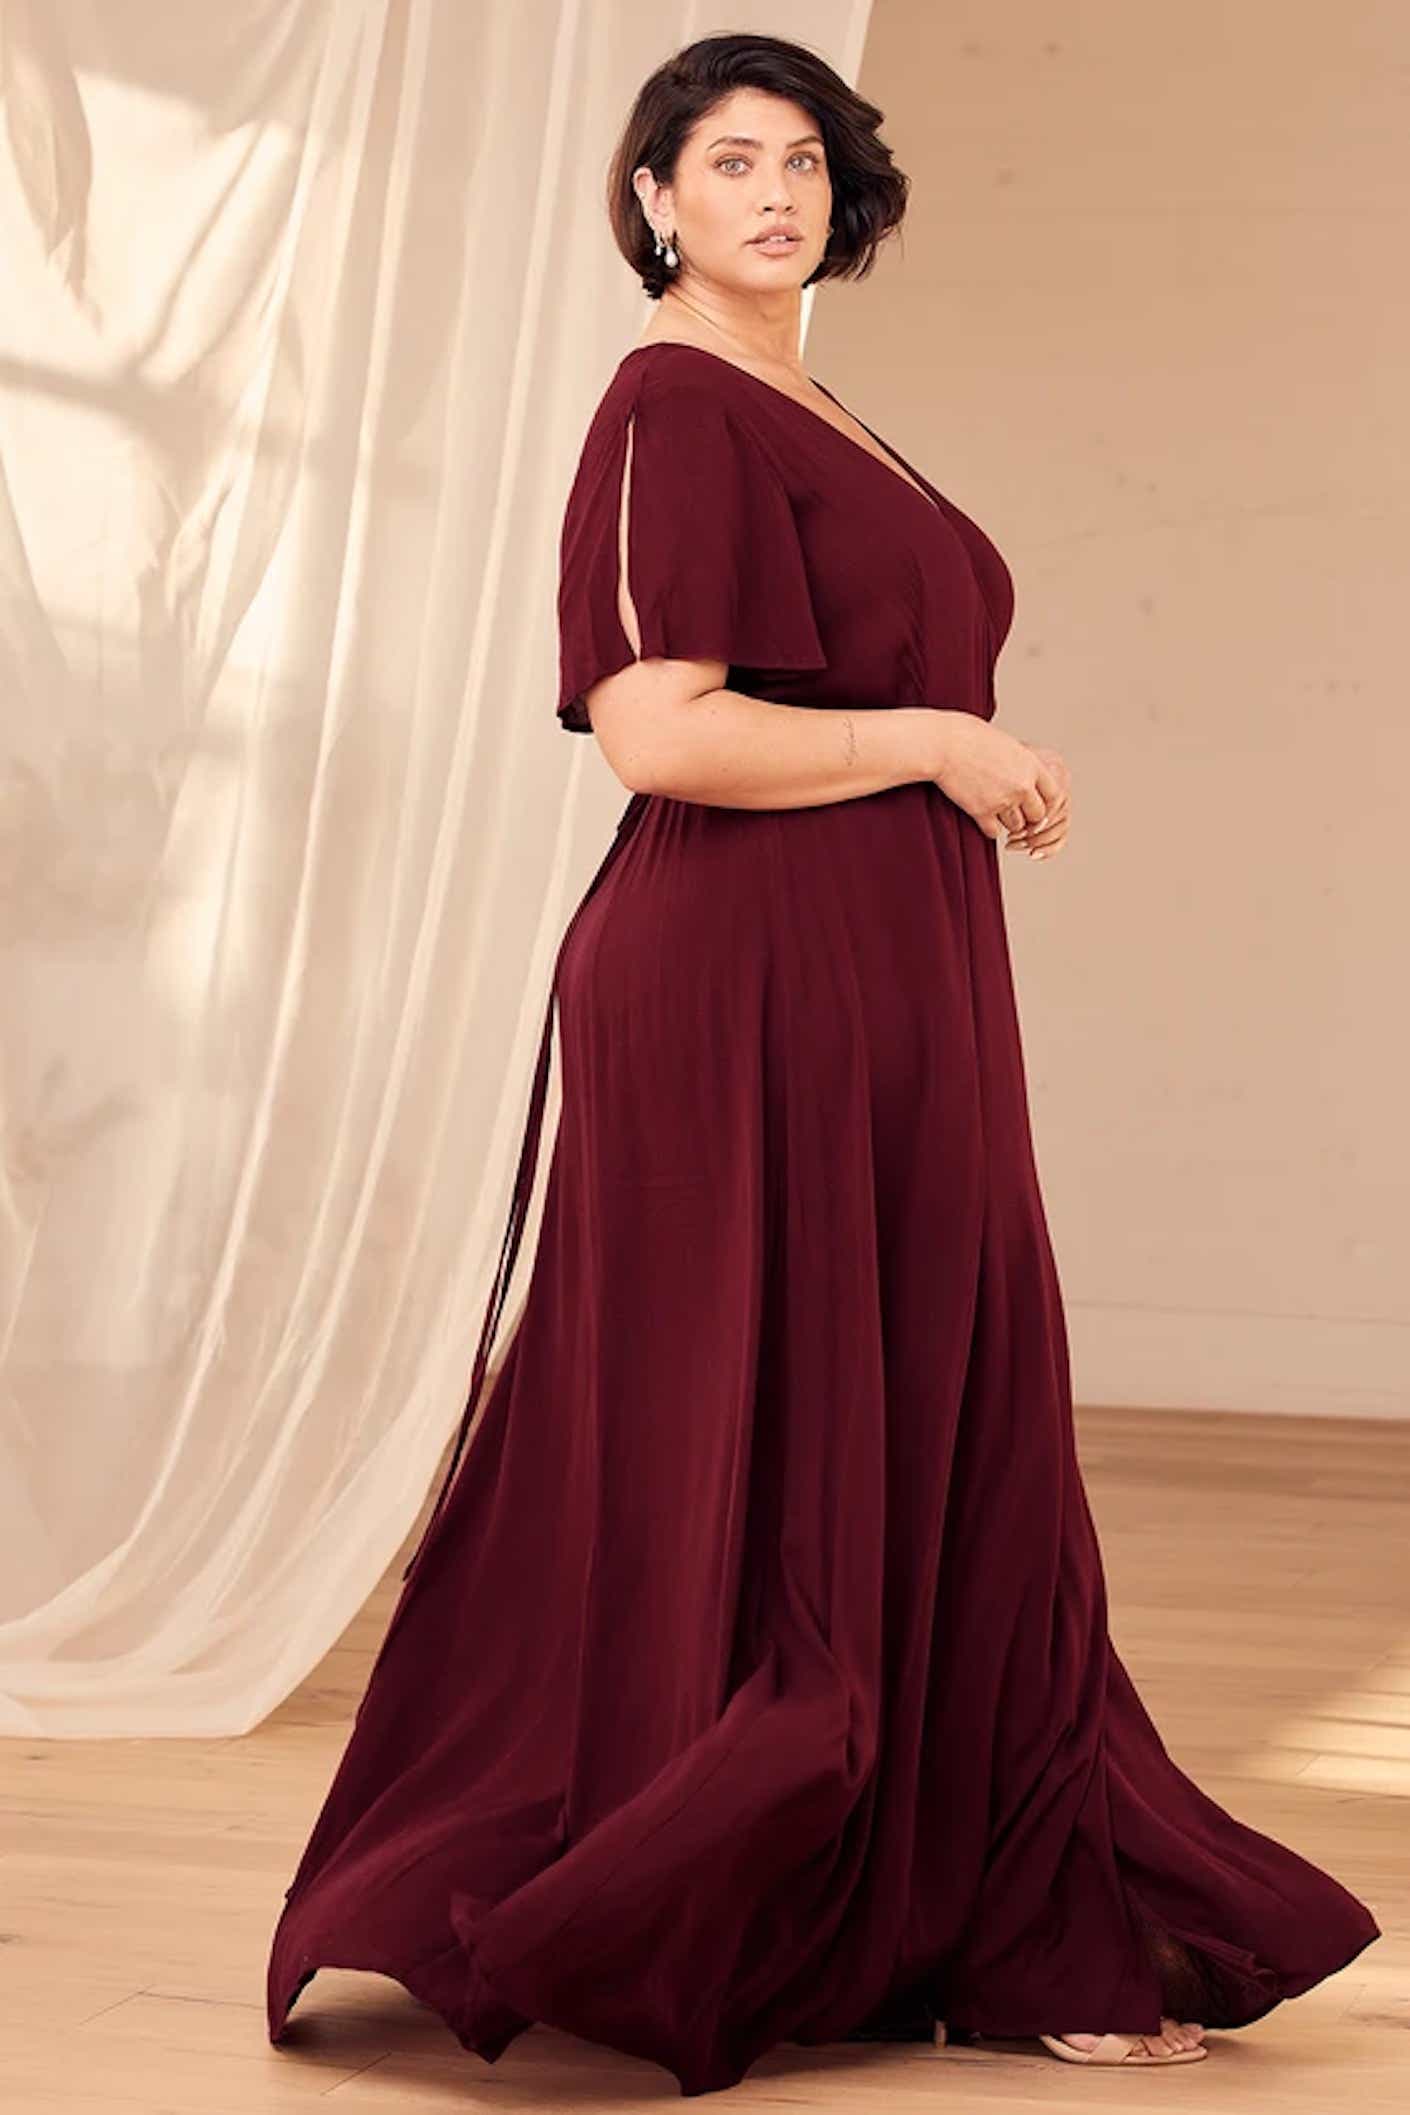 A woman wears a burgundy, floor length, wrap maxi dress that drapes dramatically.